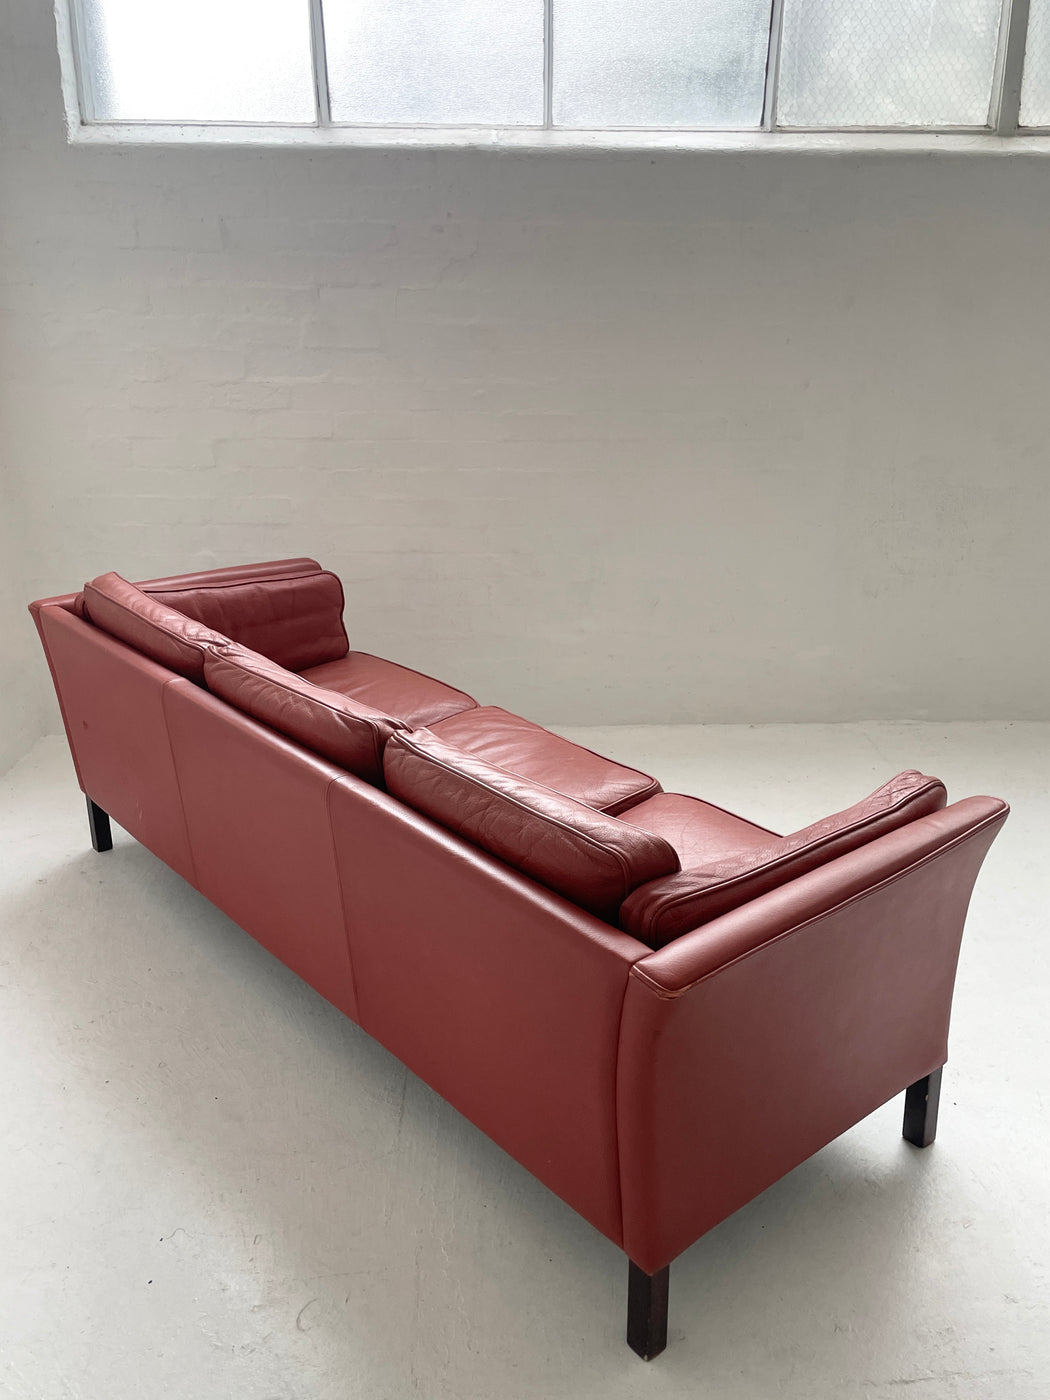 Mogens Hansen 'Model 2225' Sofa